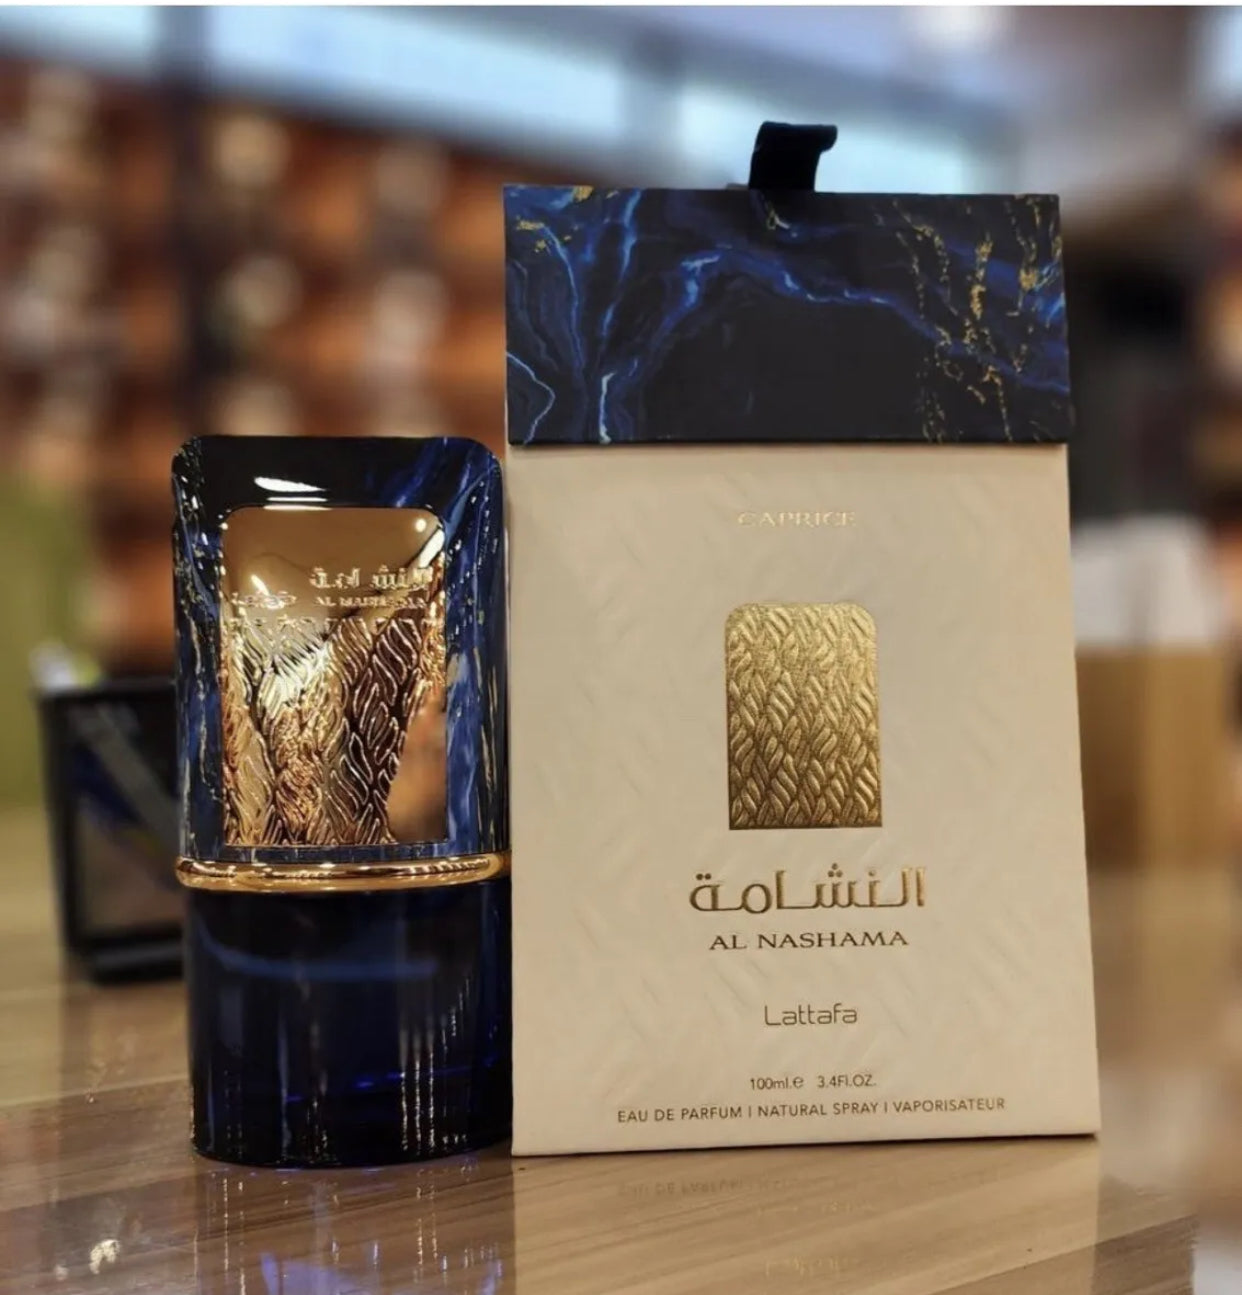 Al Nashama Caprice Edp Perfum By Lattafa 10 Ml Sample